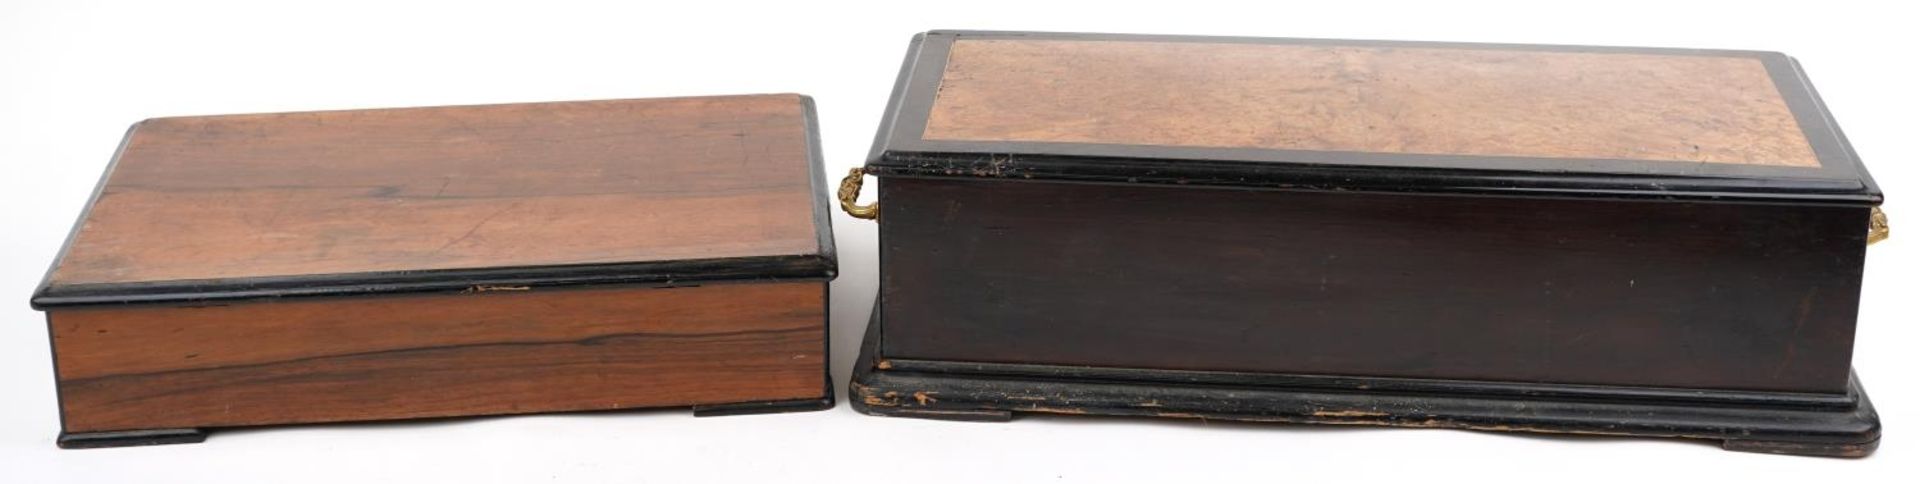 Nicol Freres, good large 19th century Swiss inlaid burr walnut and ebonised music box with gilt - Image 11 of 11